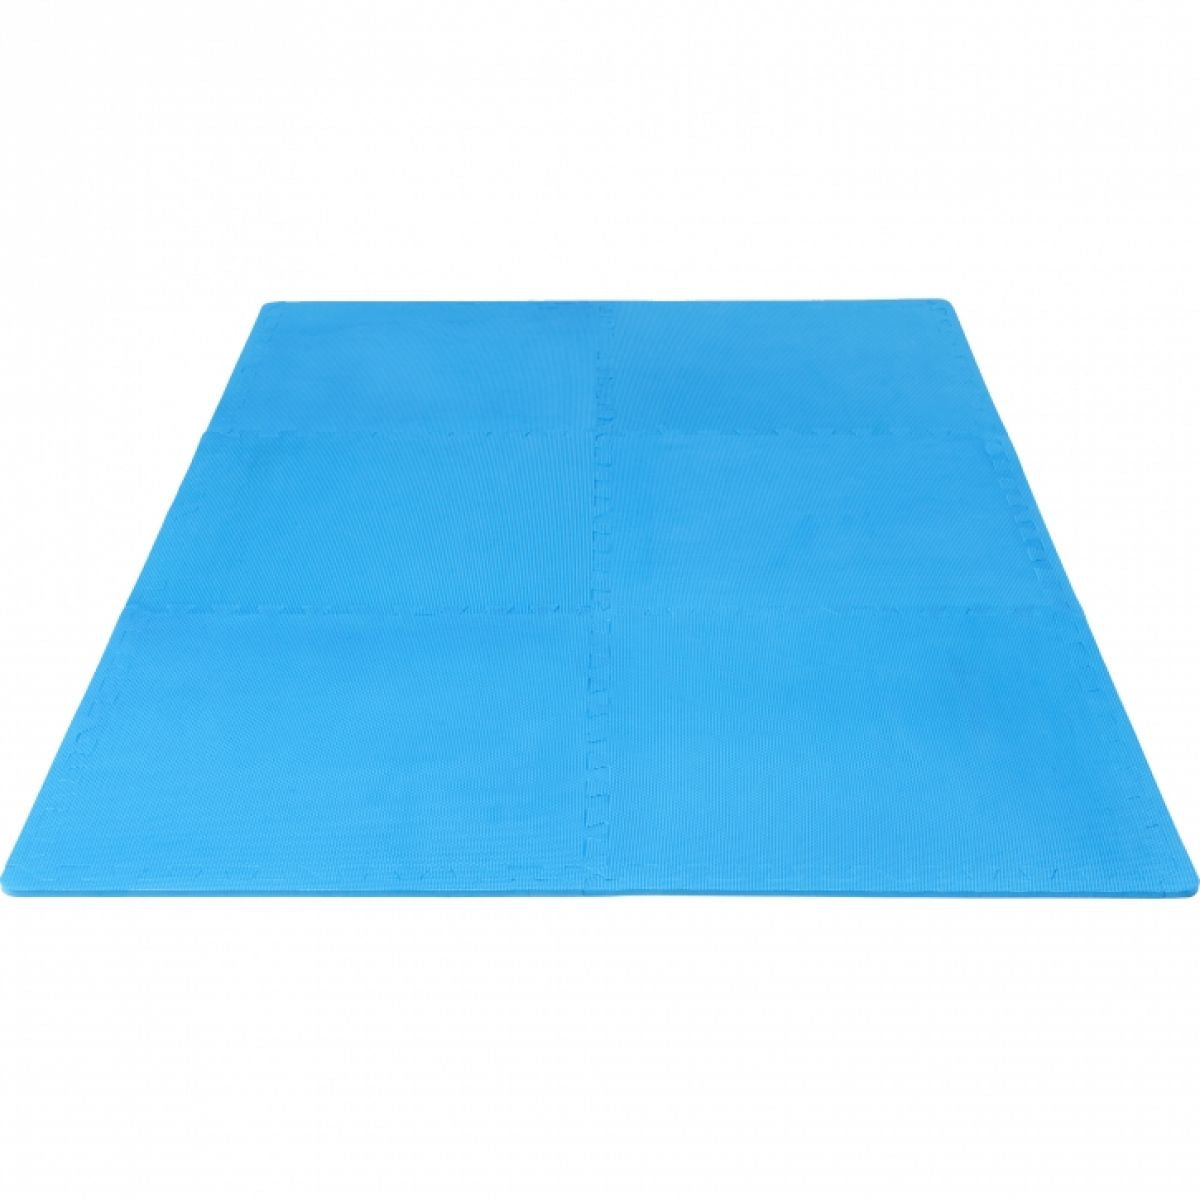 Sportschool Vloer Beschermingsmatten (6 matten + 12 eindstukken) Blauw